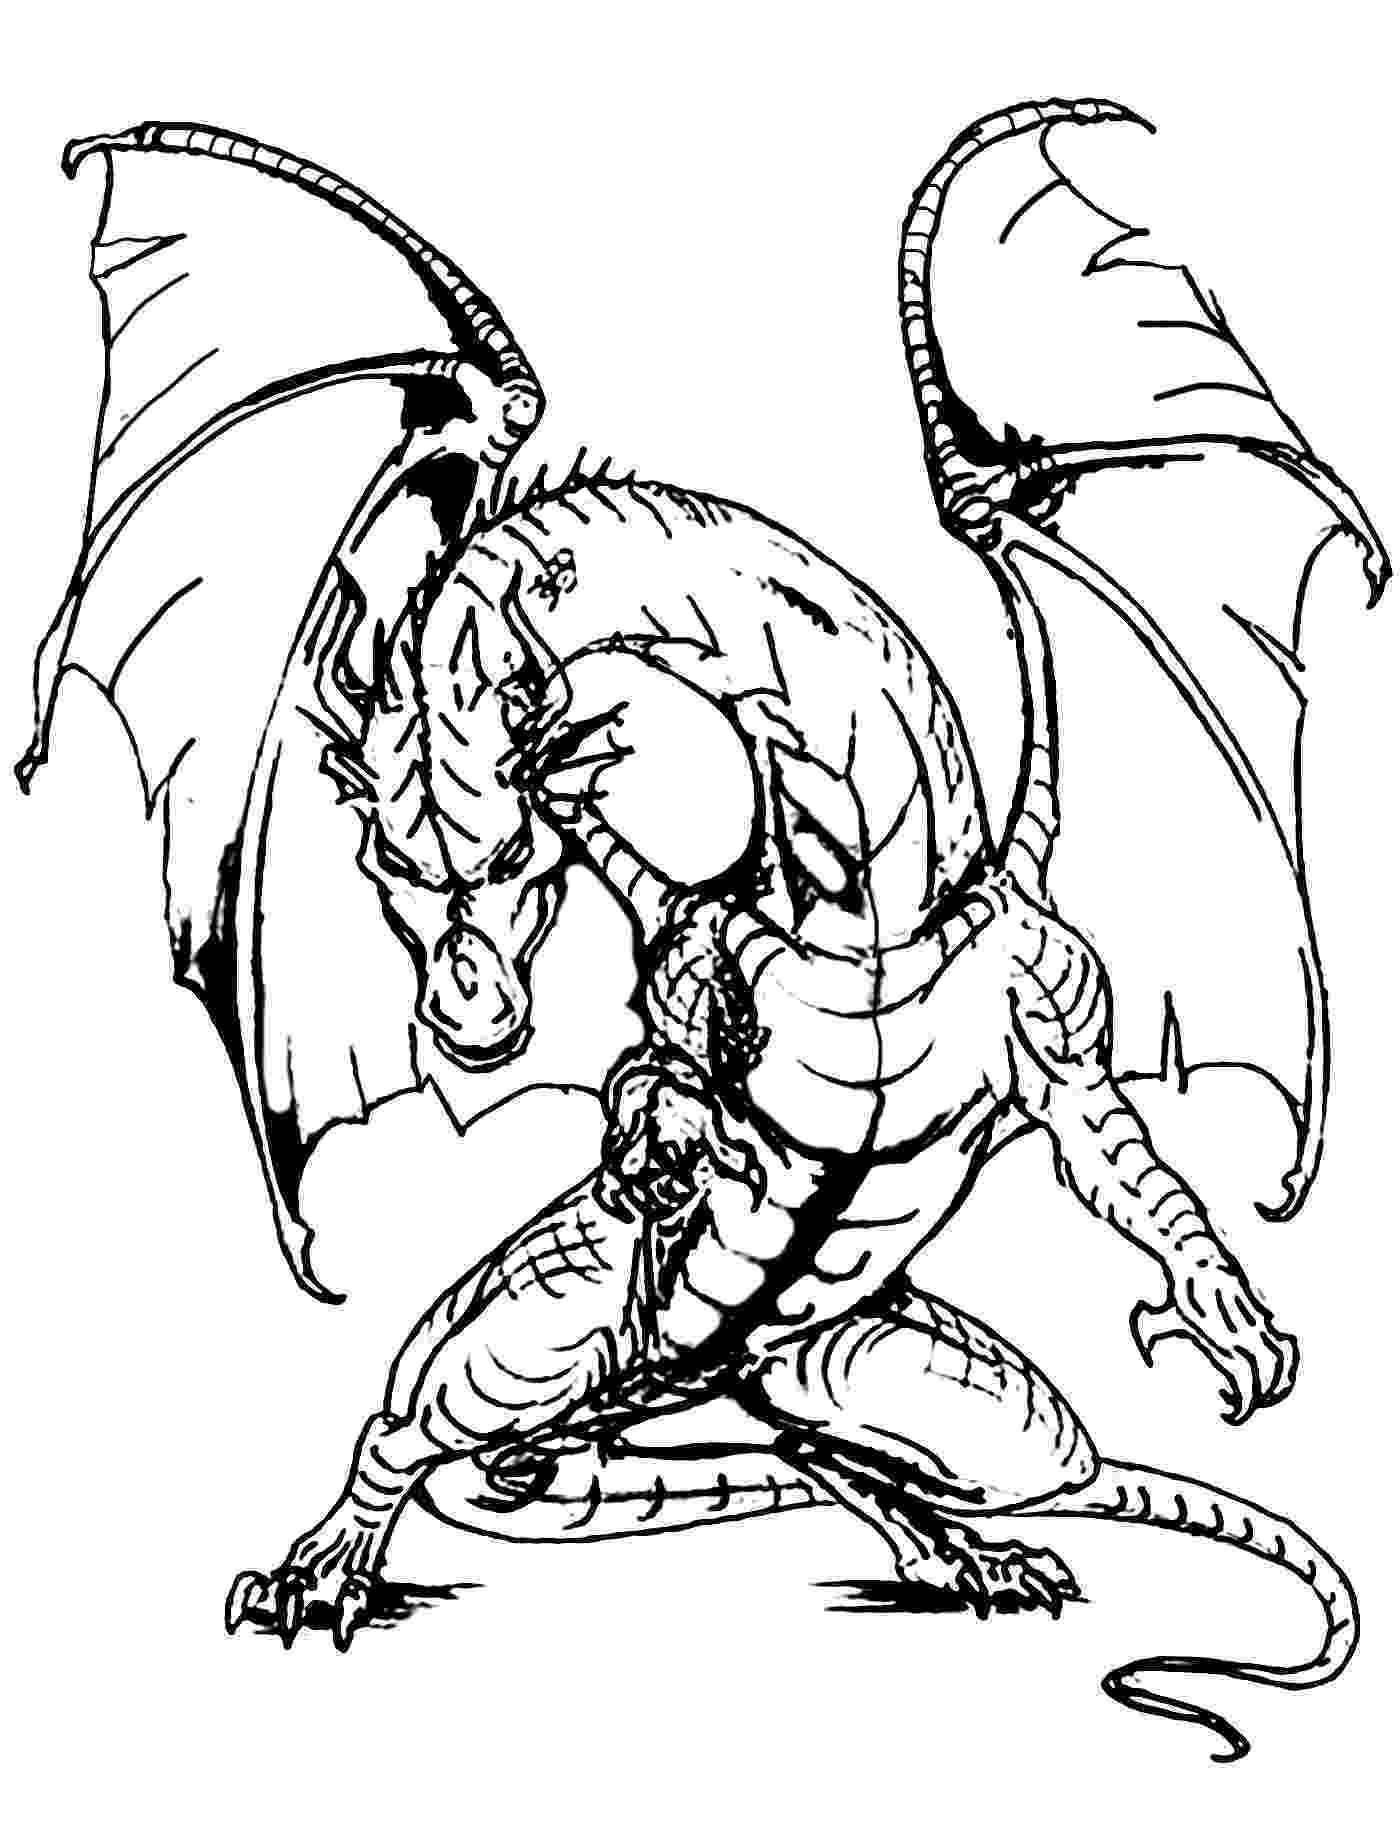 dragon coloring sheet dragon coloring pages coloringpages1001com sheet dragon coloring 